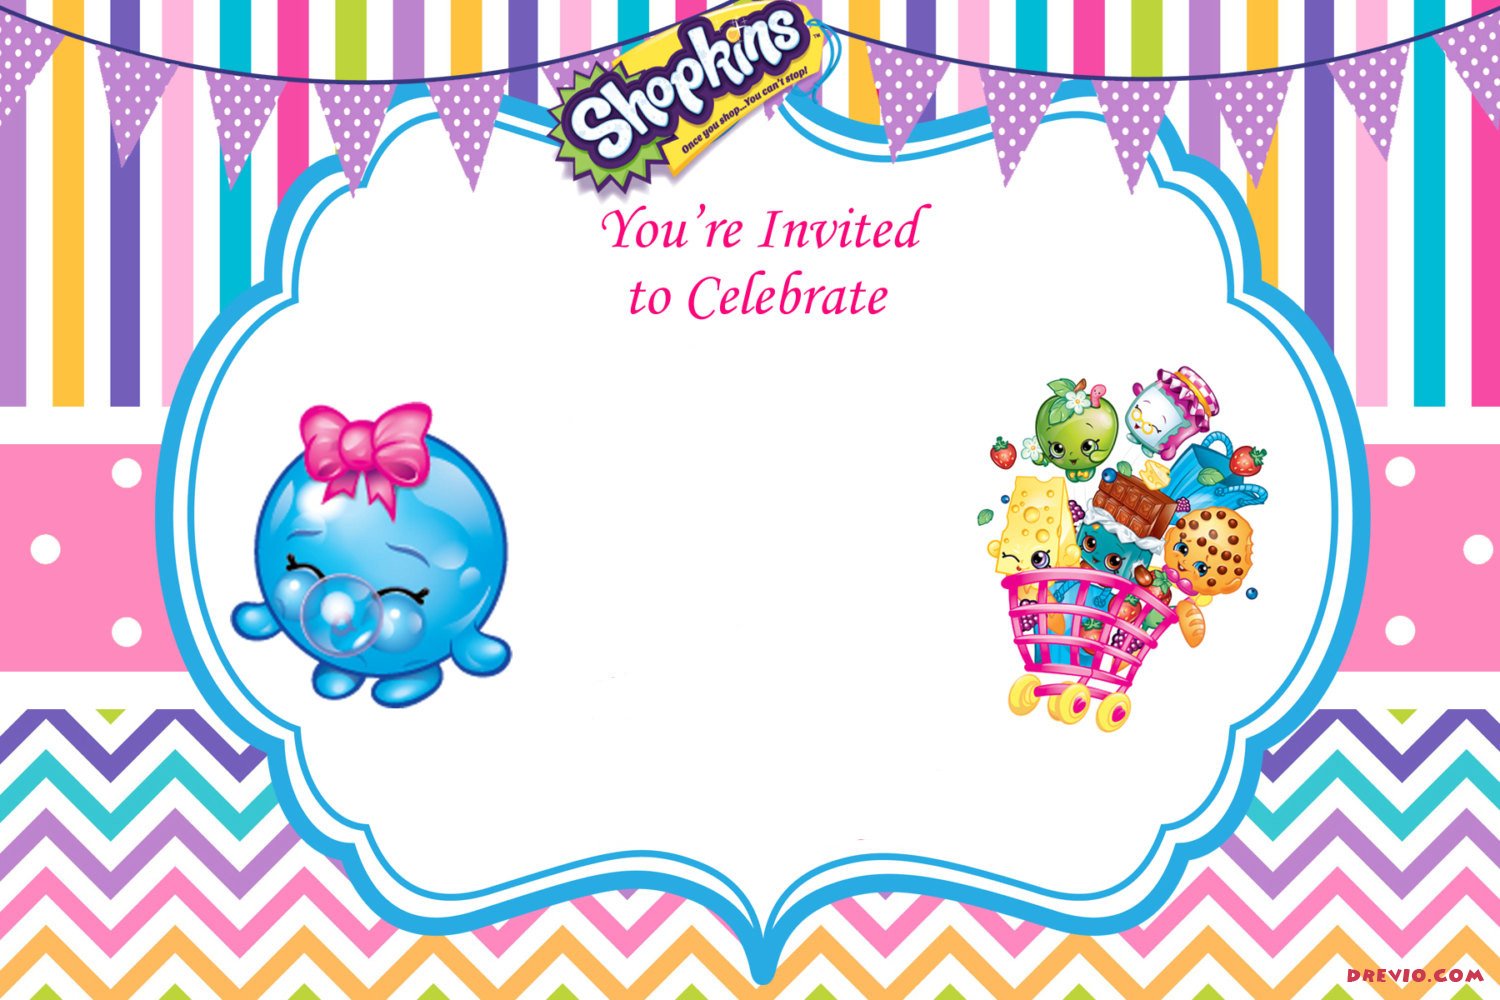 Shopkins Birthday Party Invitation Shopkins Invite, Shopkins Birthday Party Invite Shopkins Invitation